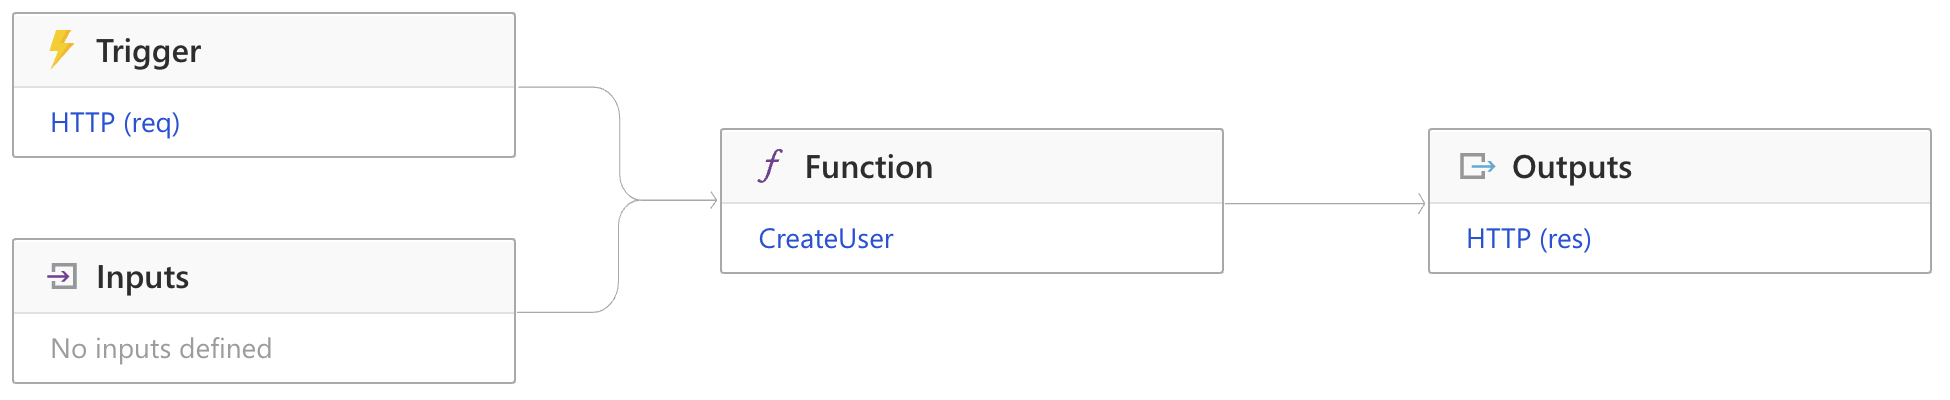 Azure function integration diagram